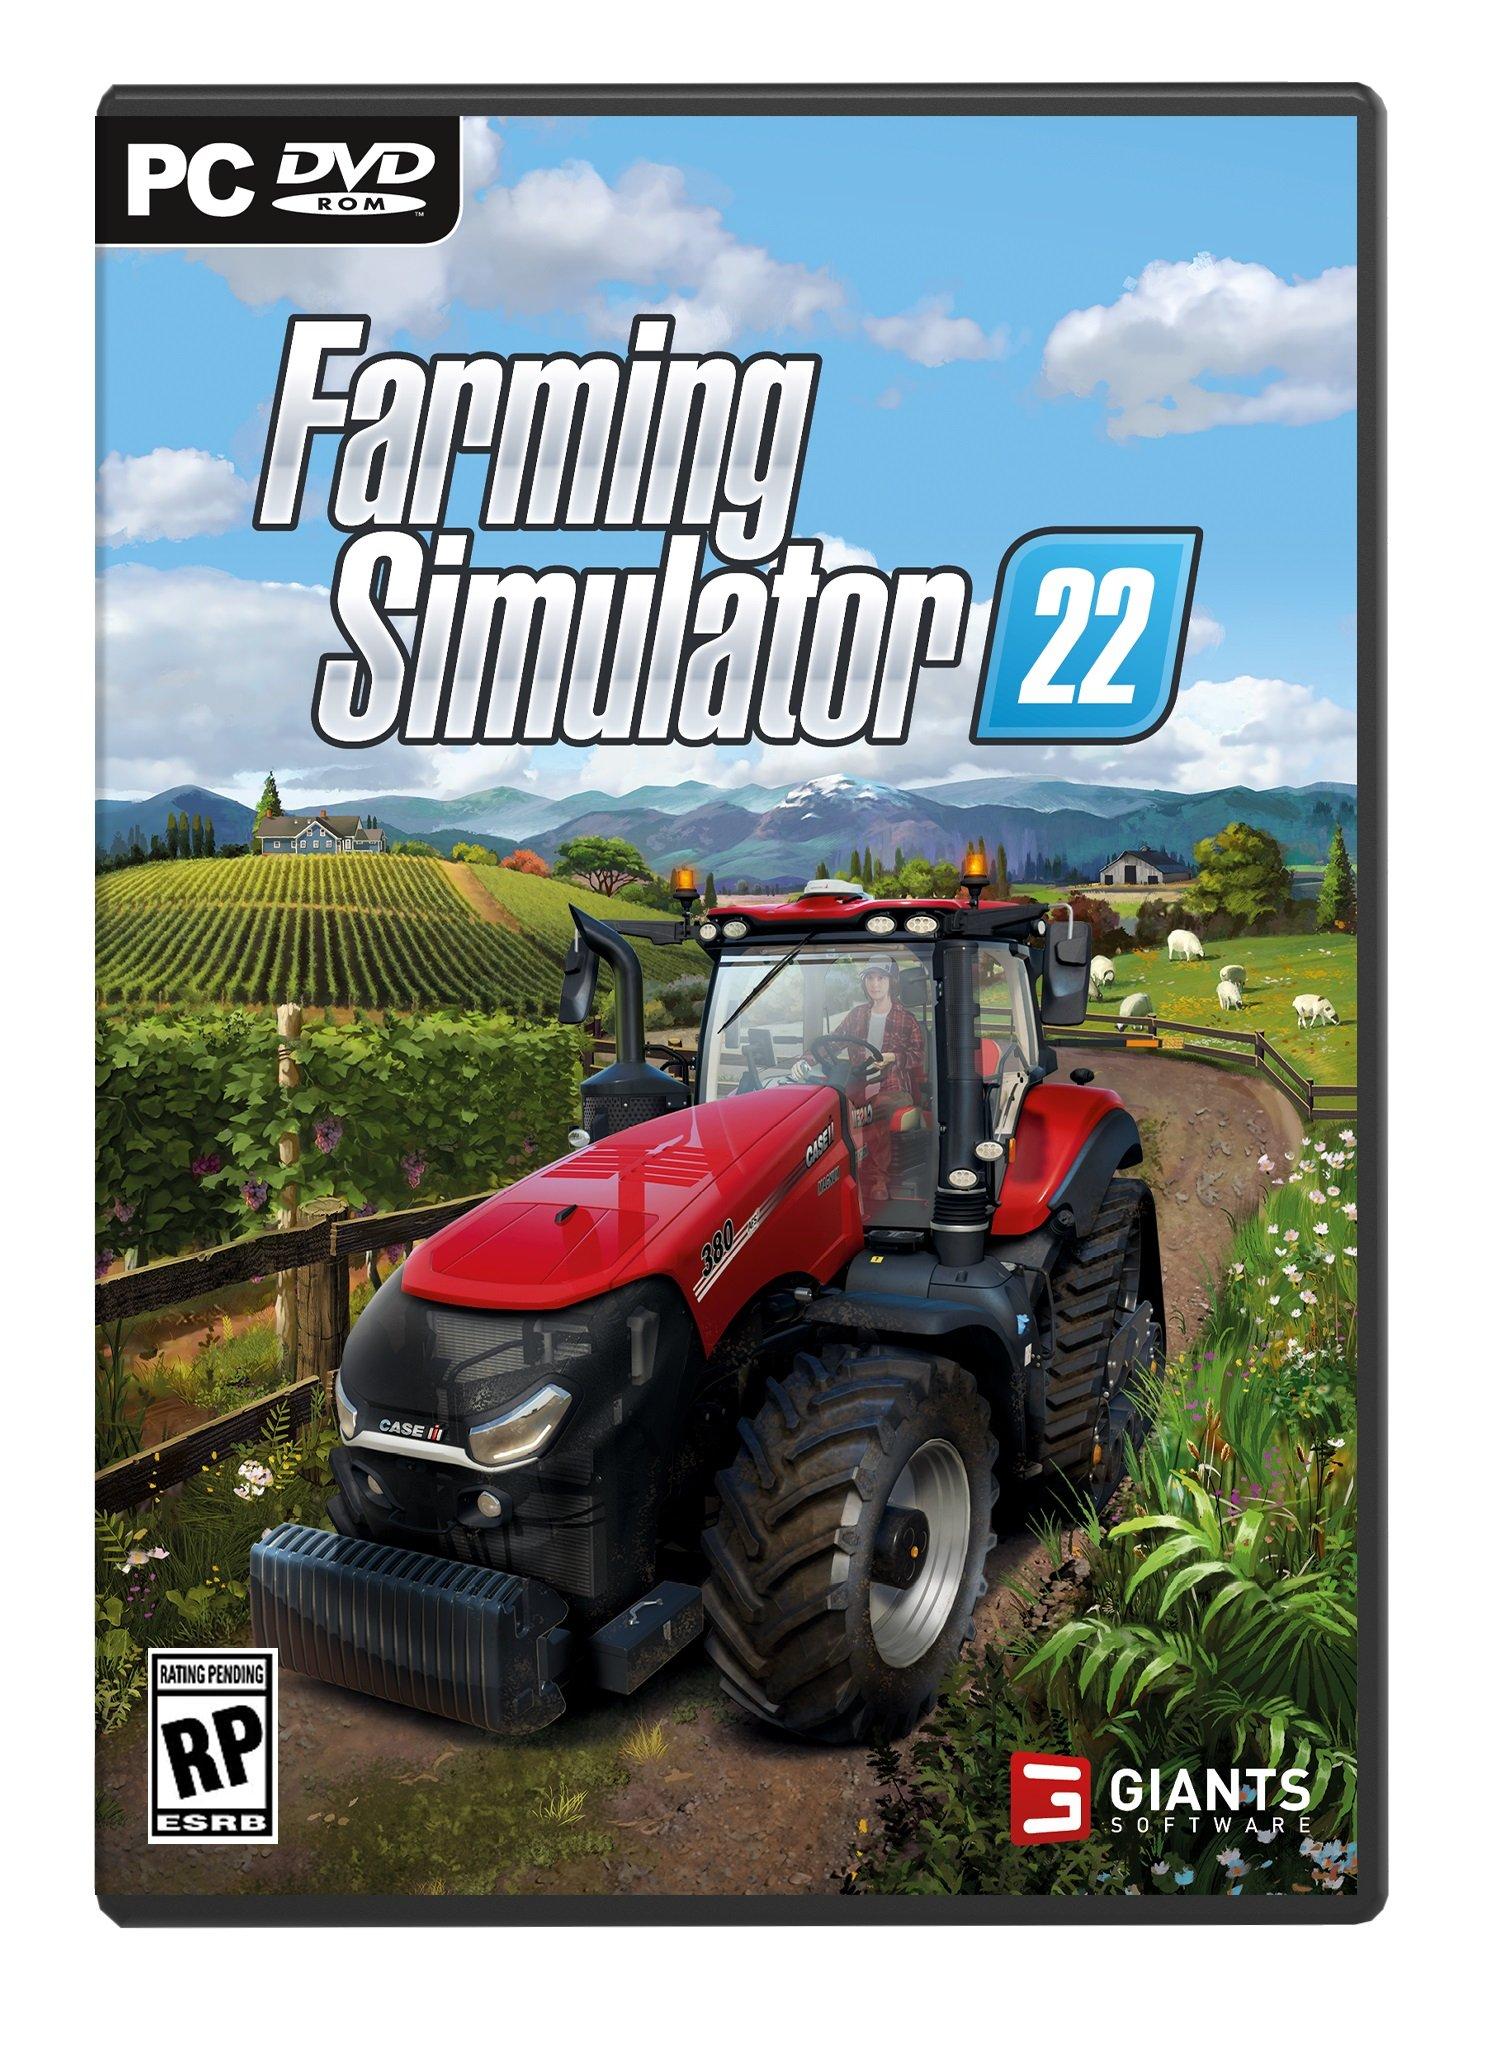 Nintendo Switch Game Deals - Farming Simulator 20 - Stander